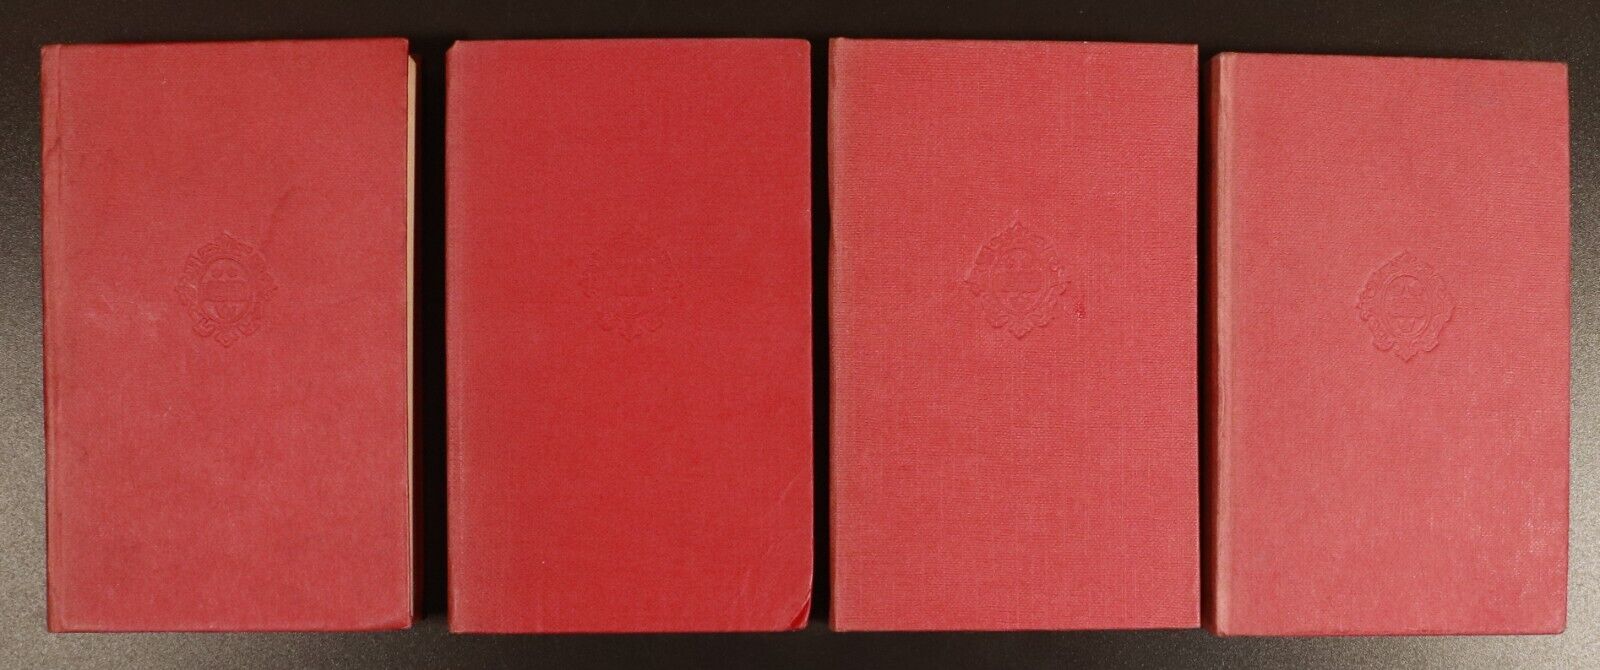 1960 4vol Jane Austen Charlotte & Emily Bronte 4 Female Author Fiction Books